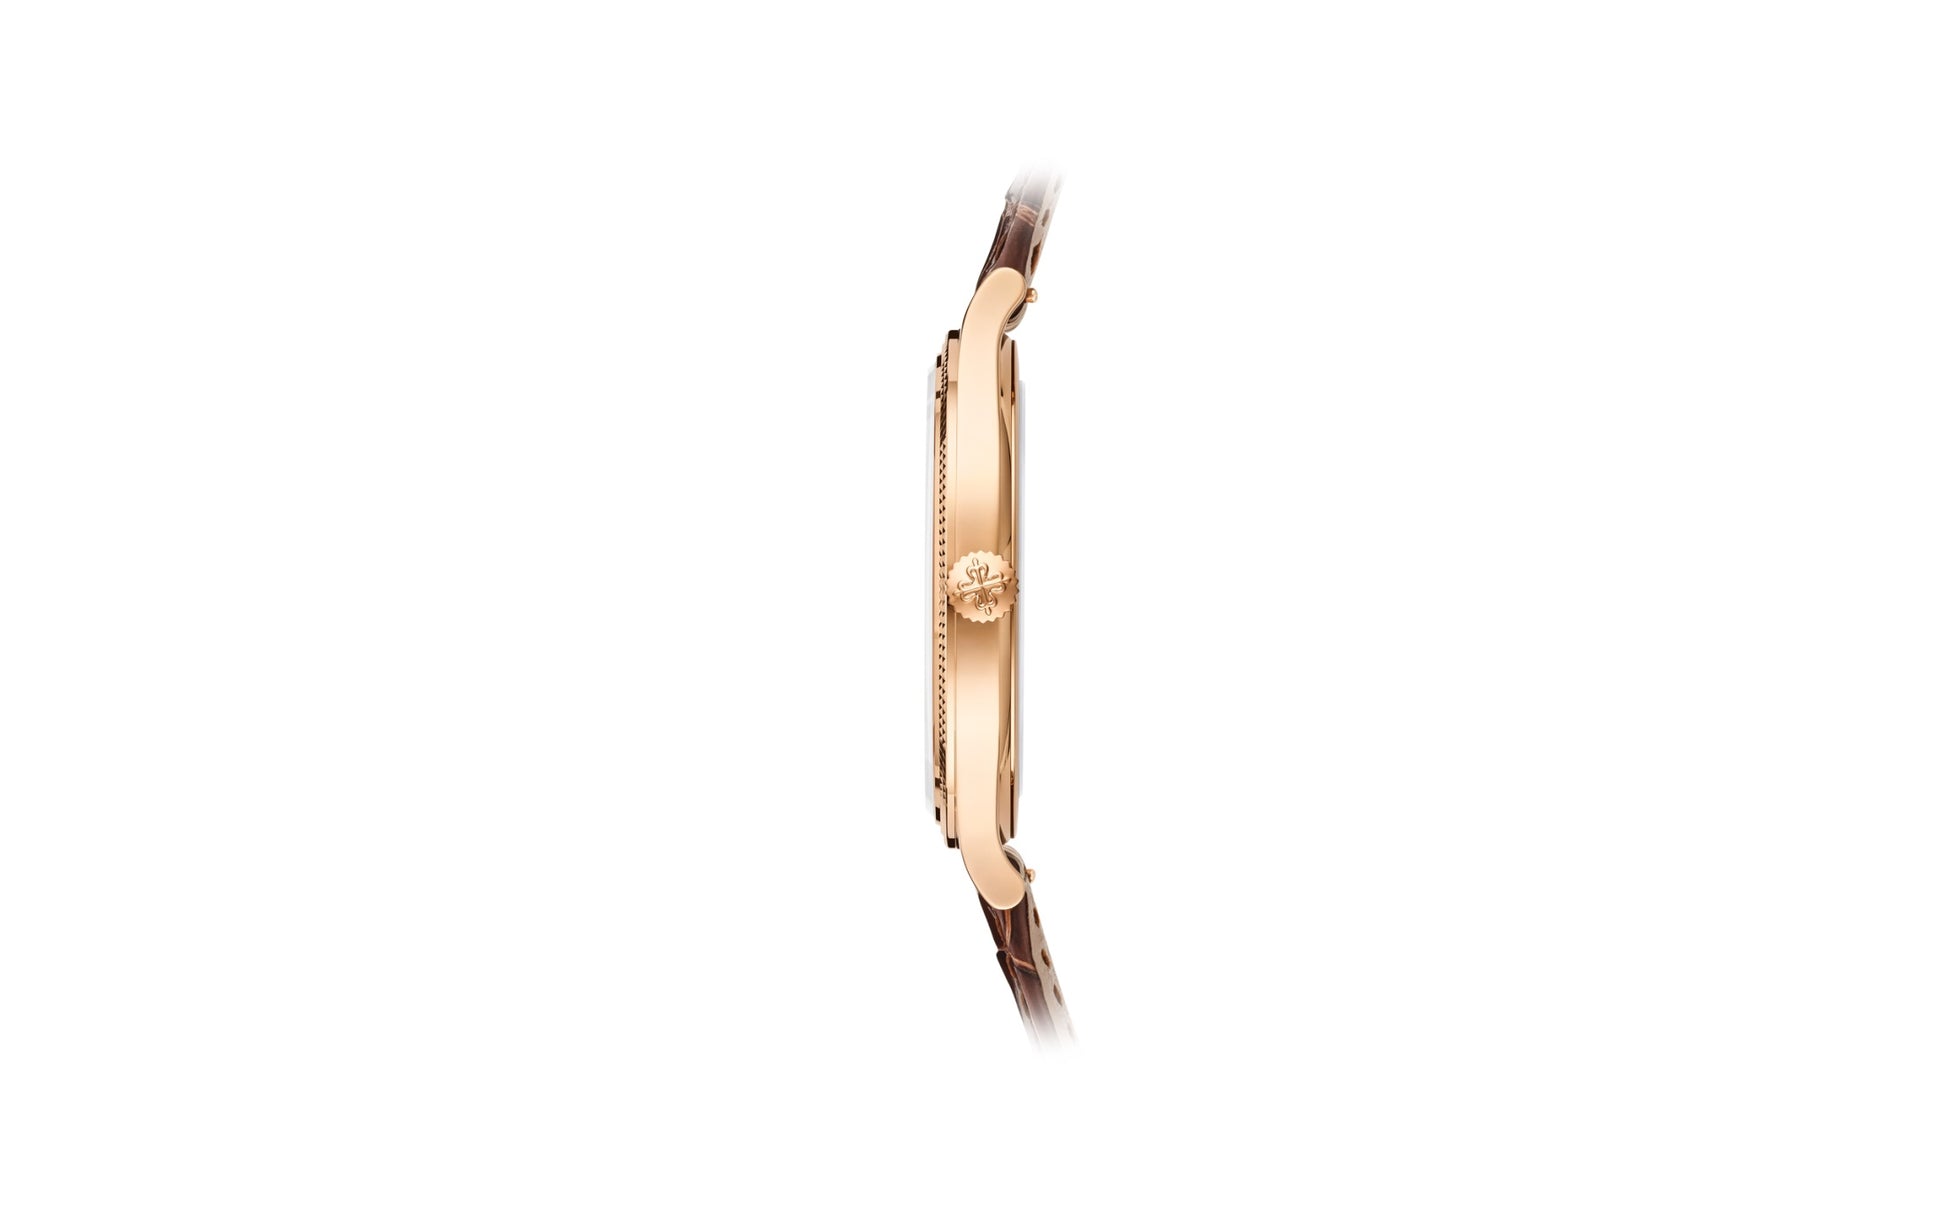 Patek Philippe Calatrava, 18k Rose Gold, 39mm, Ref# 6119R-001, Right